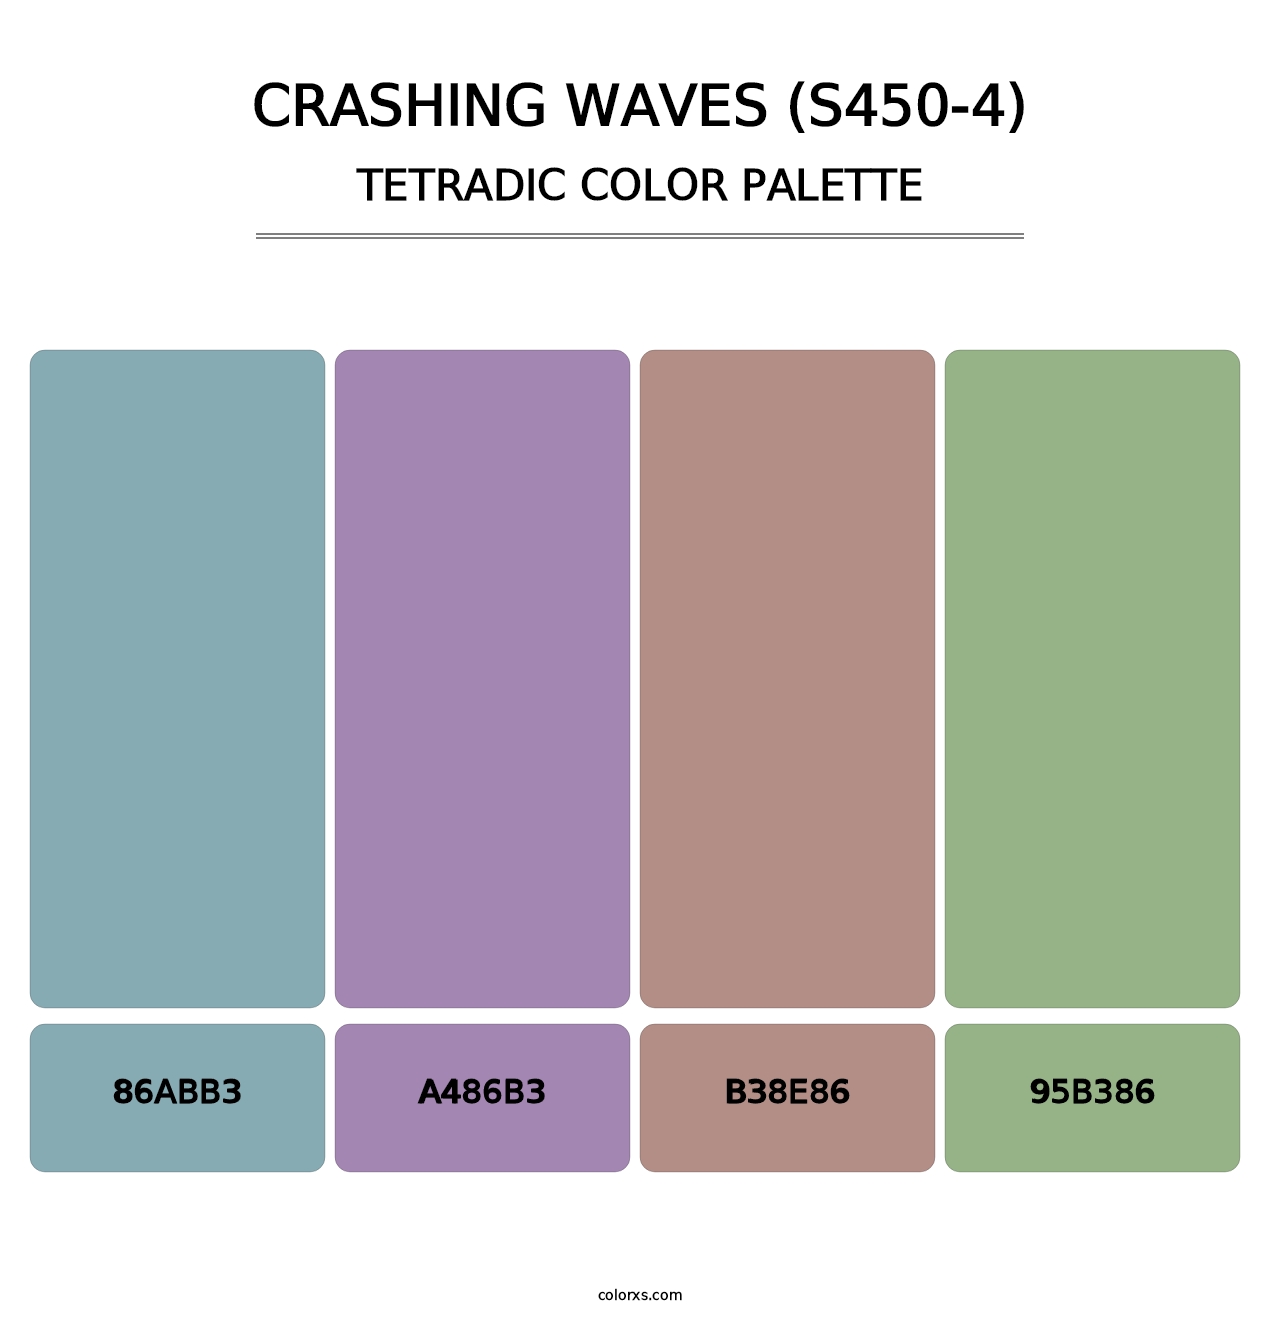 Crashing Waves (S450-4) - Tetradic Color Palette